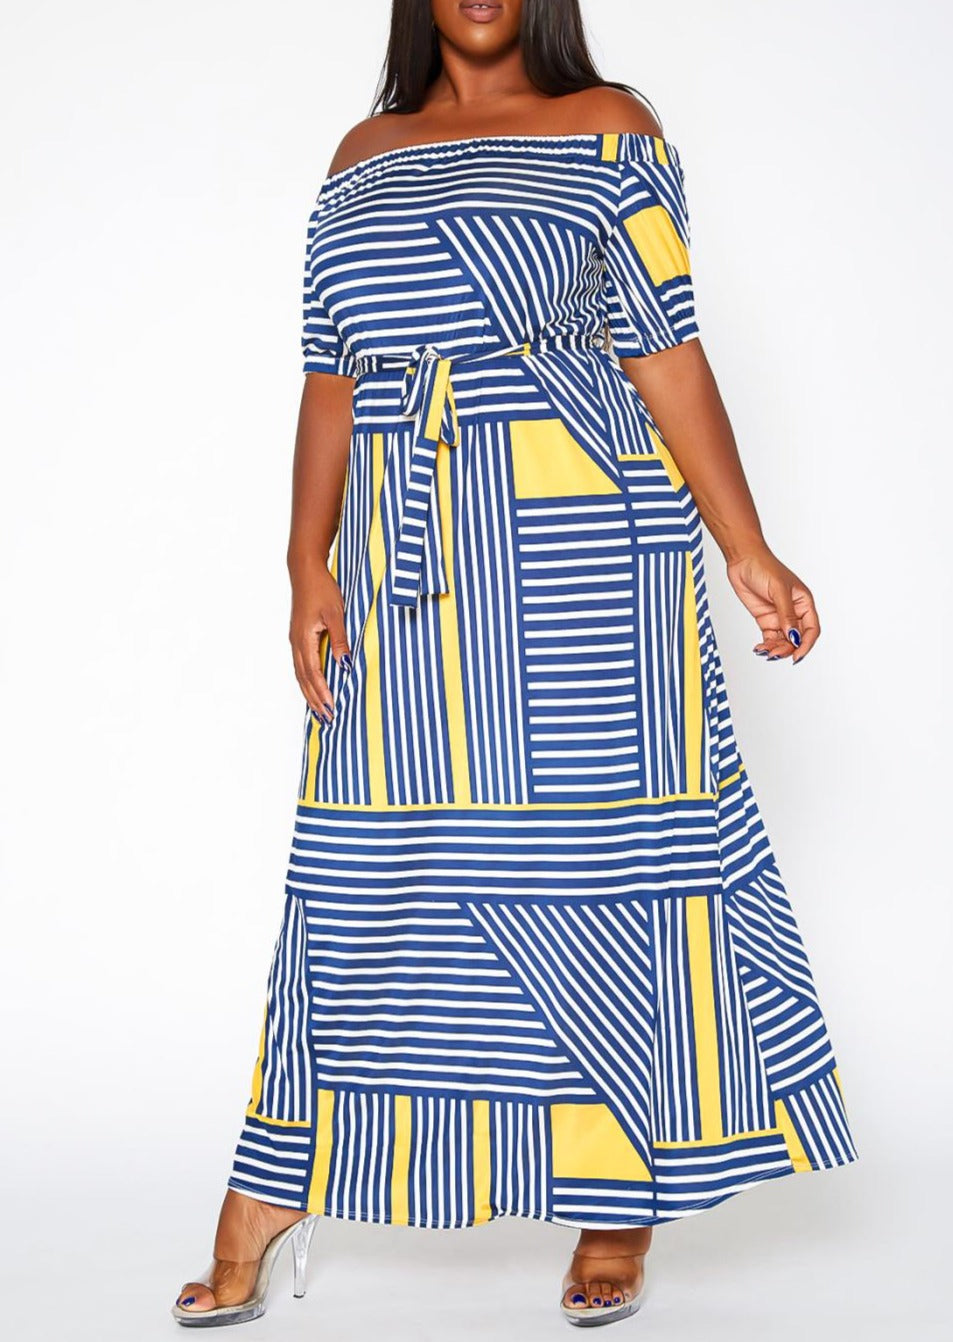 HI Curvy Plus Size Women Striped Print Off Shoulder Maxi Dress Made in USA